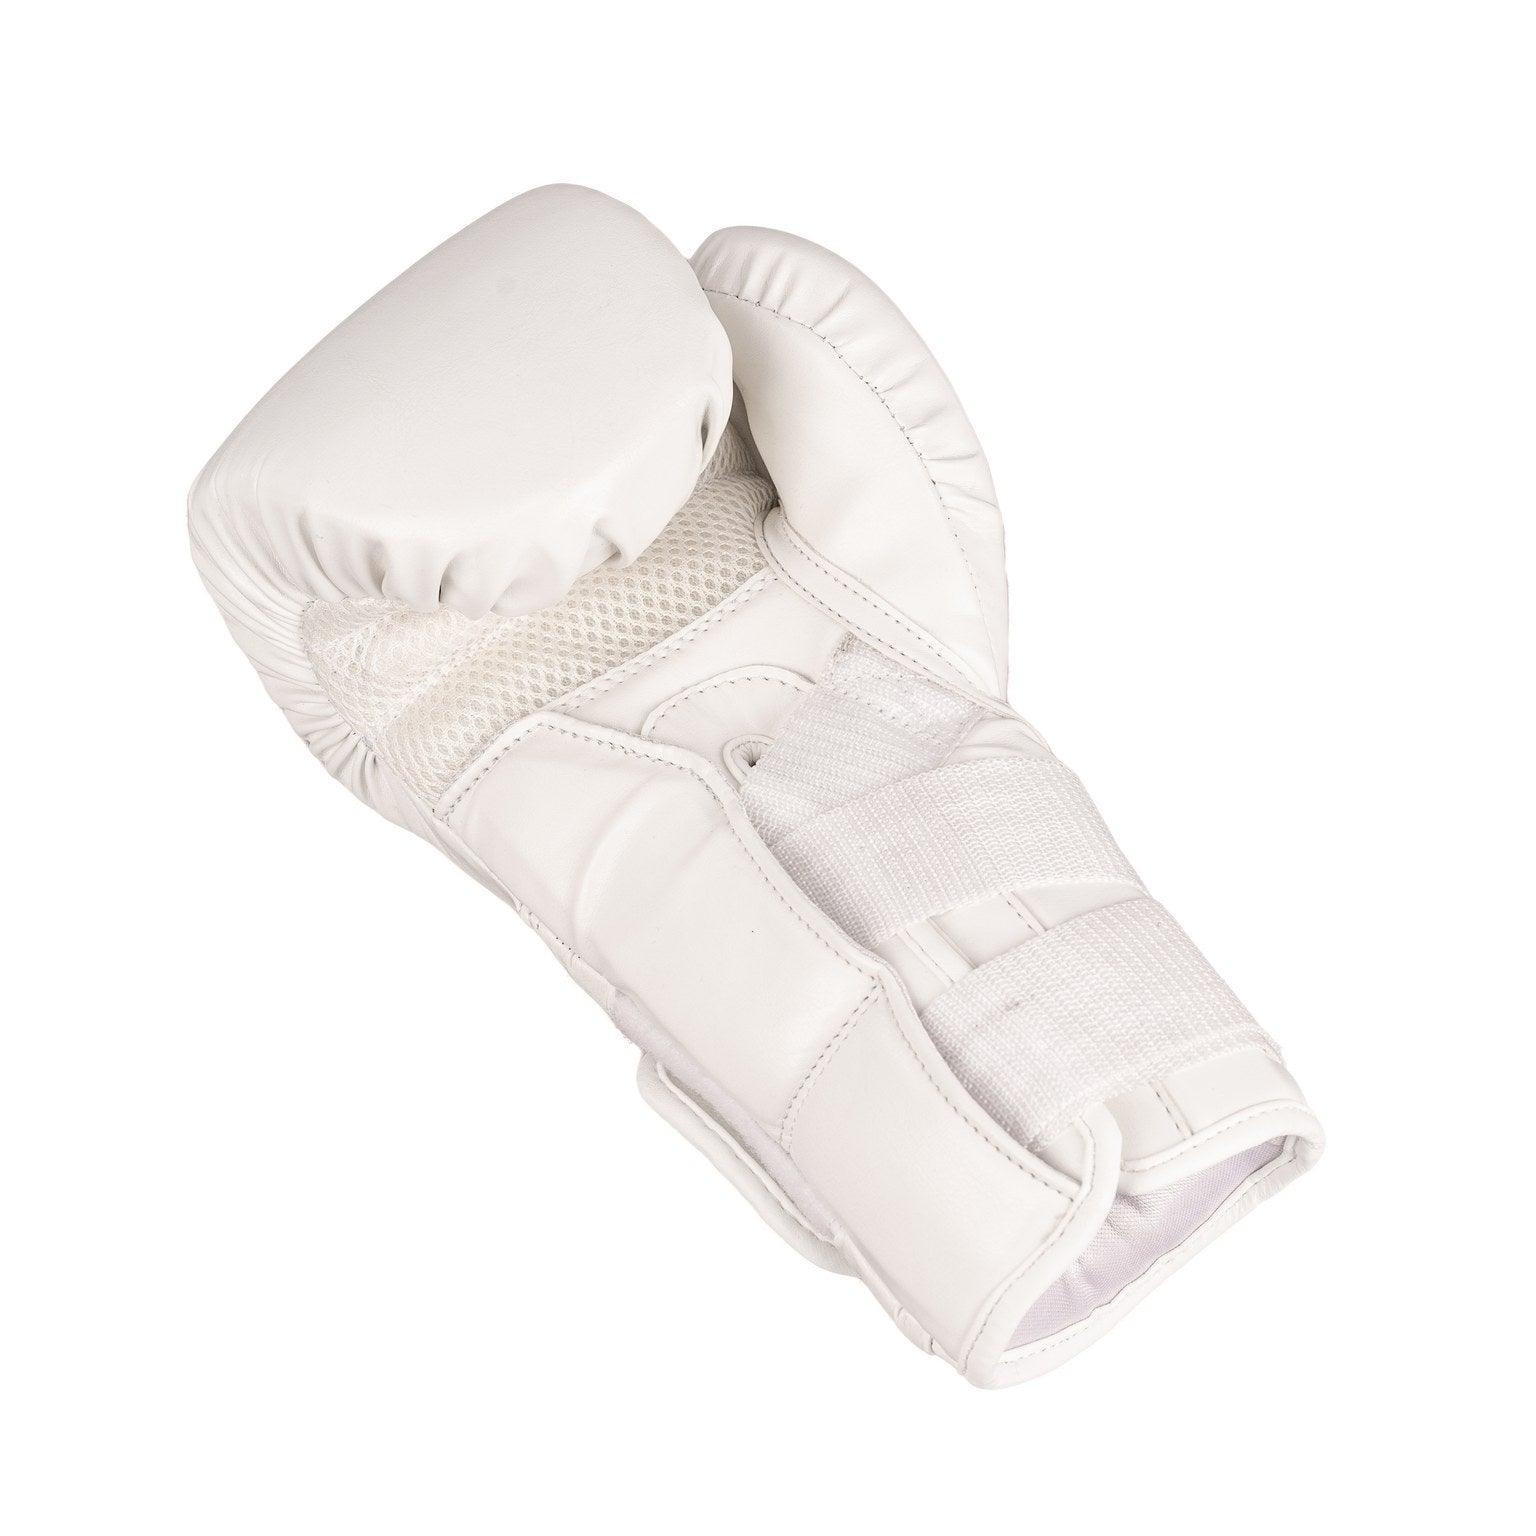 Crest Boxing Gloves "Pico 0.5" | White/Black - Crest - PFG